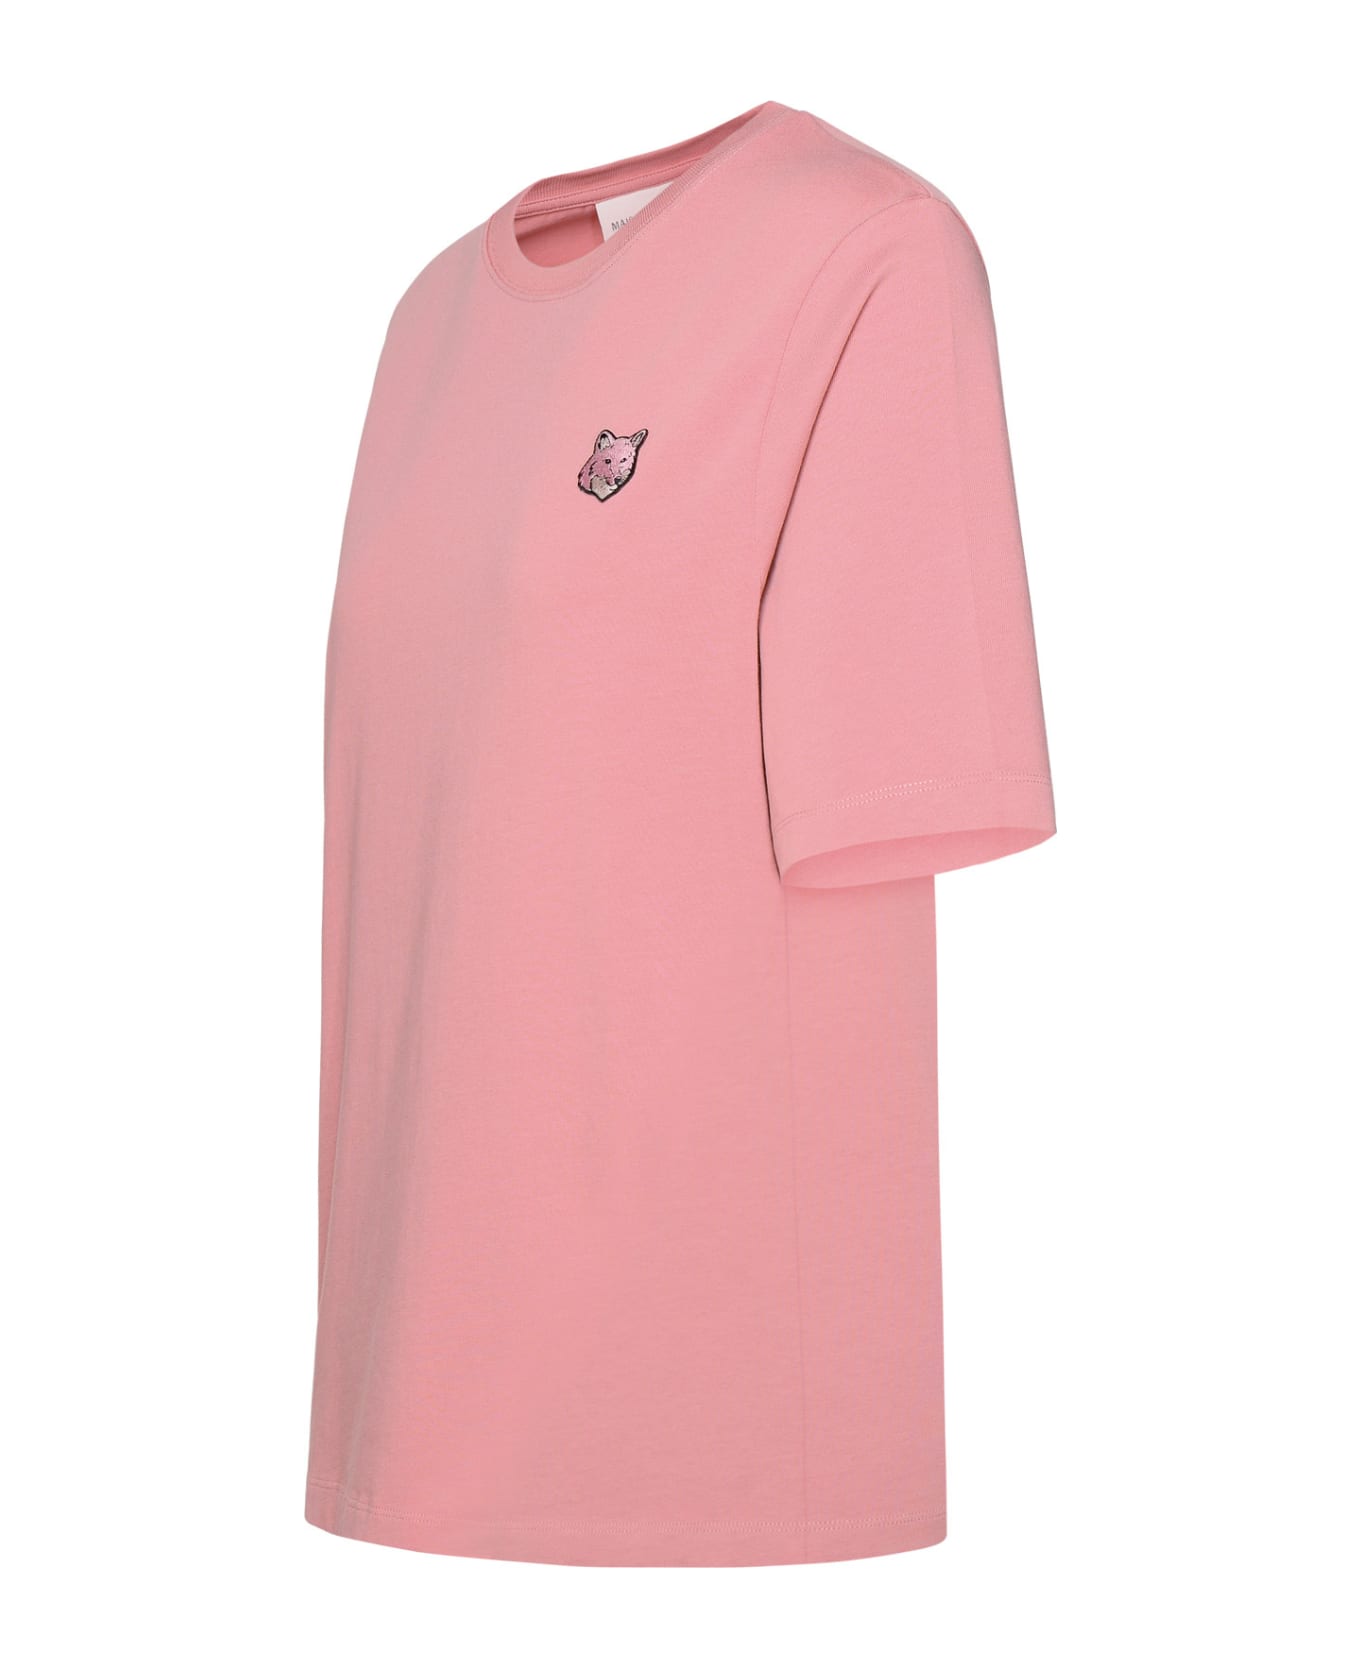 Maison Kitsuné Pink Cotton T-shirt - PINK Tシャツ